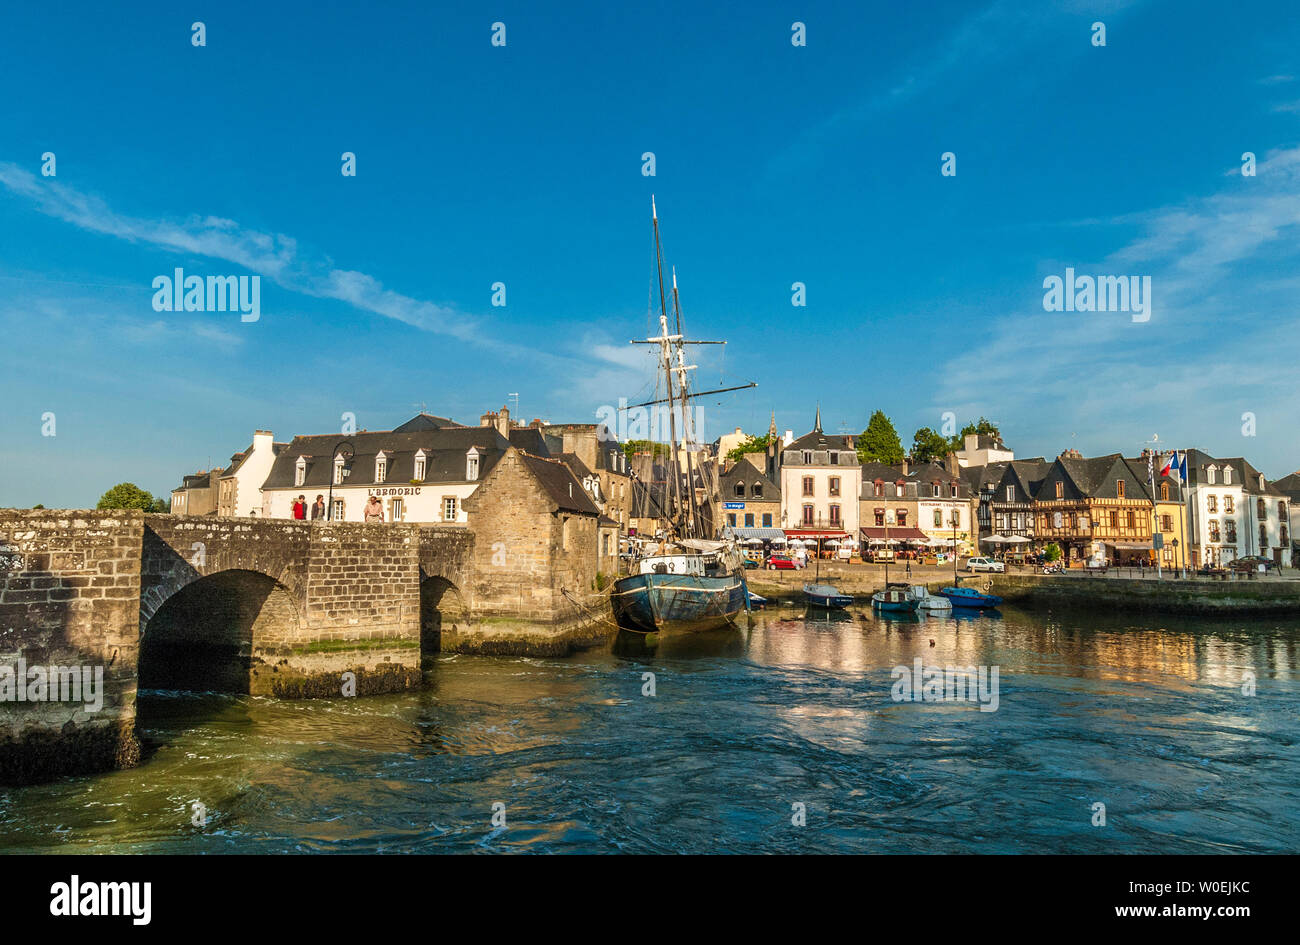 France, Brittany, Saint Goustan medieval port at Auray Stock Photo - Alamy